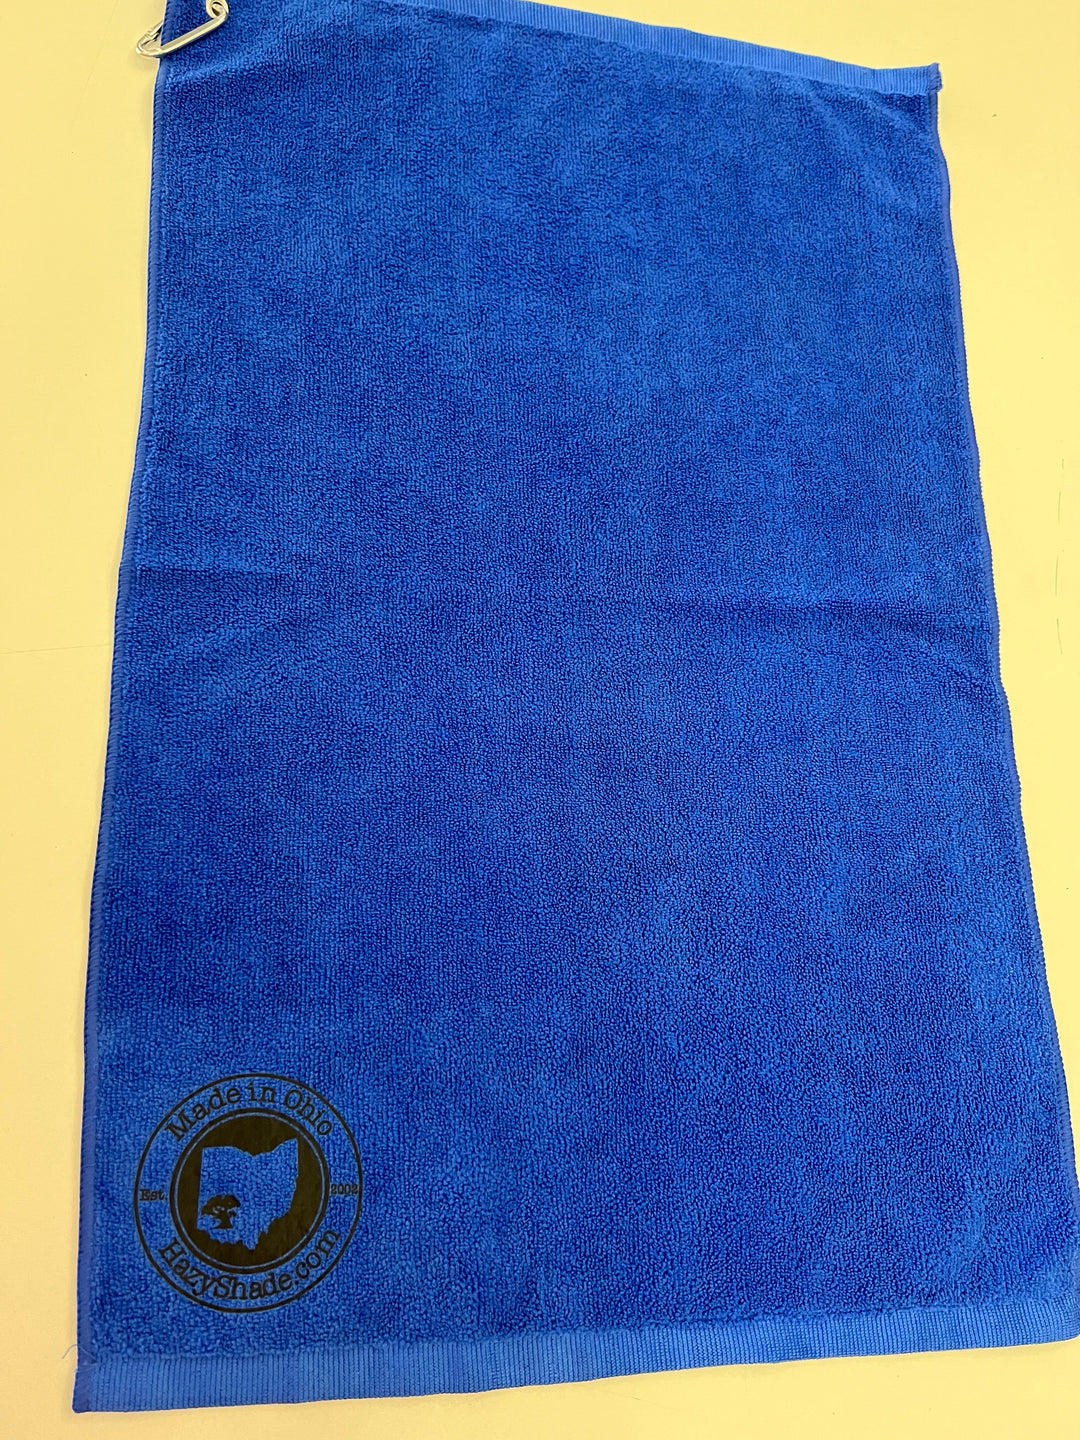 Hazy Shade Blue Microfiber Towel With Made in Ohio Logo